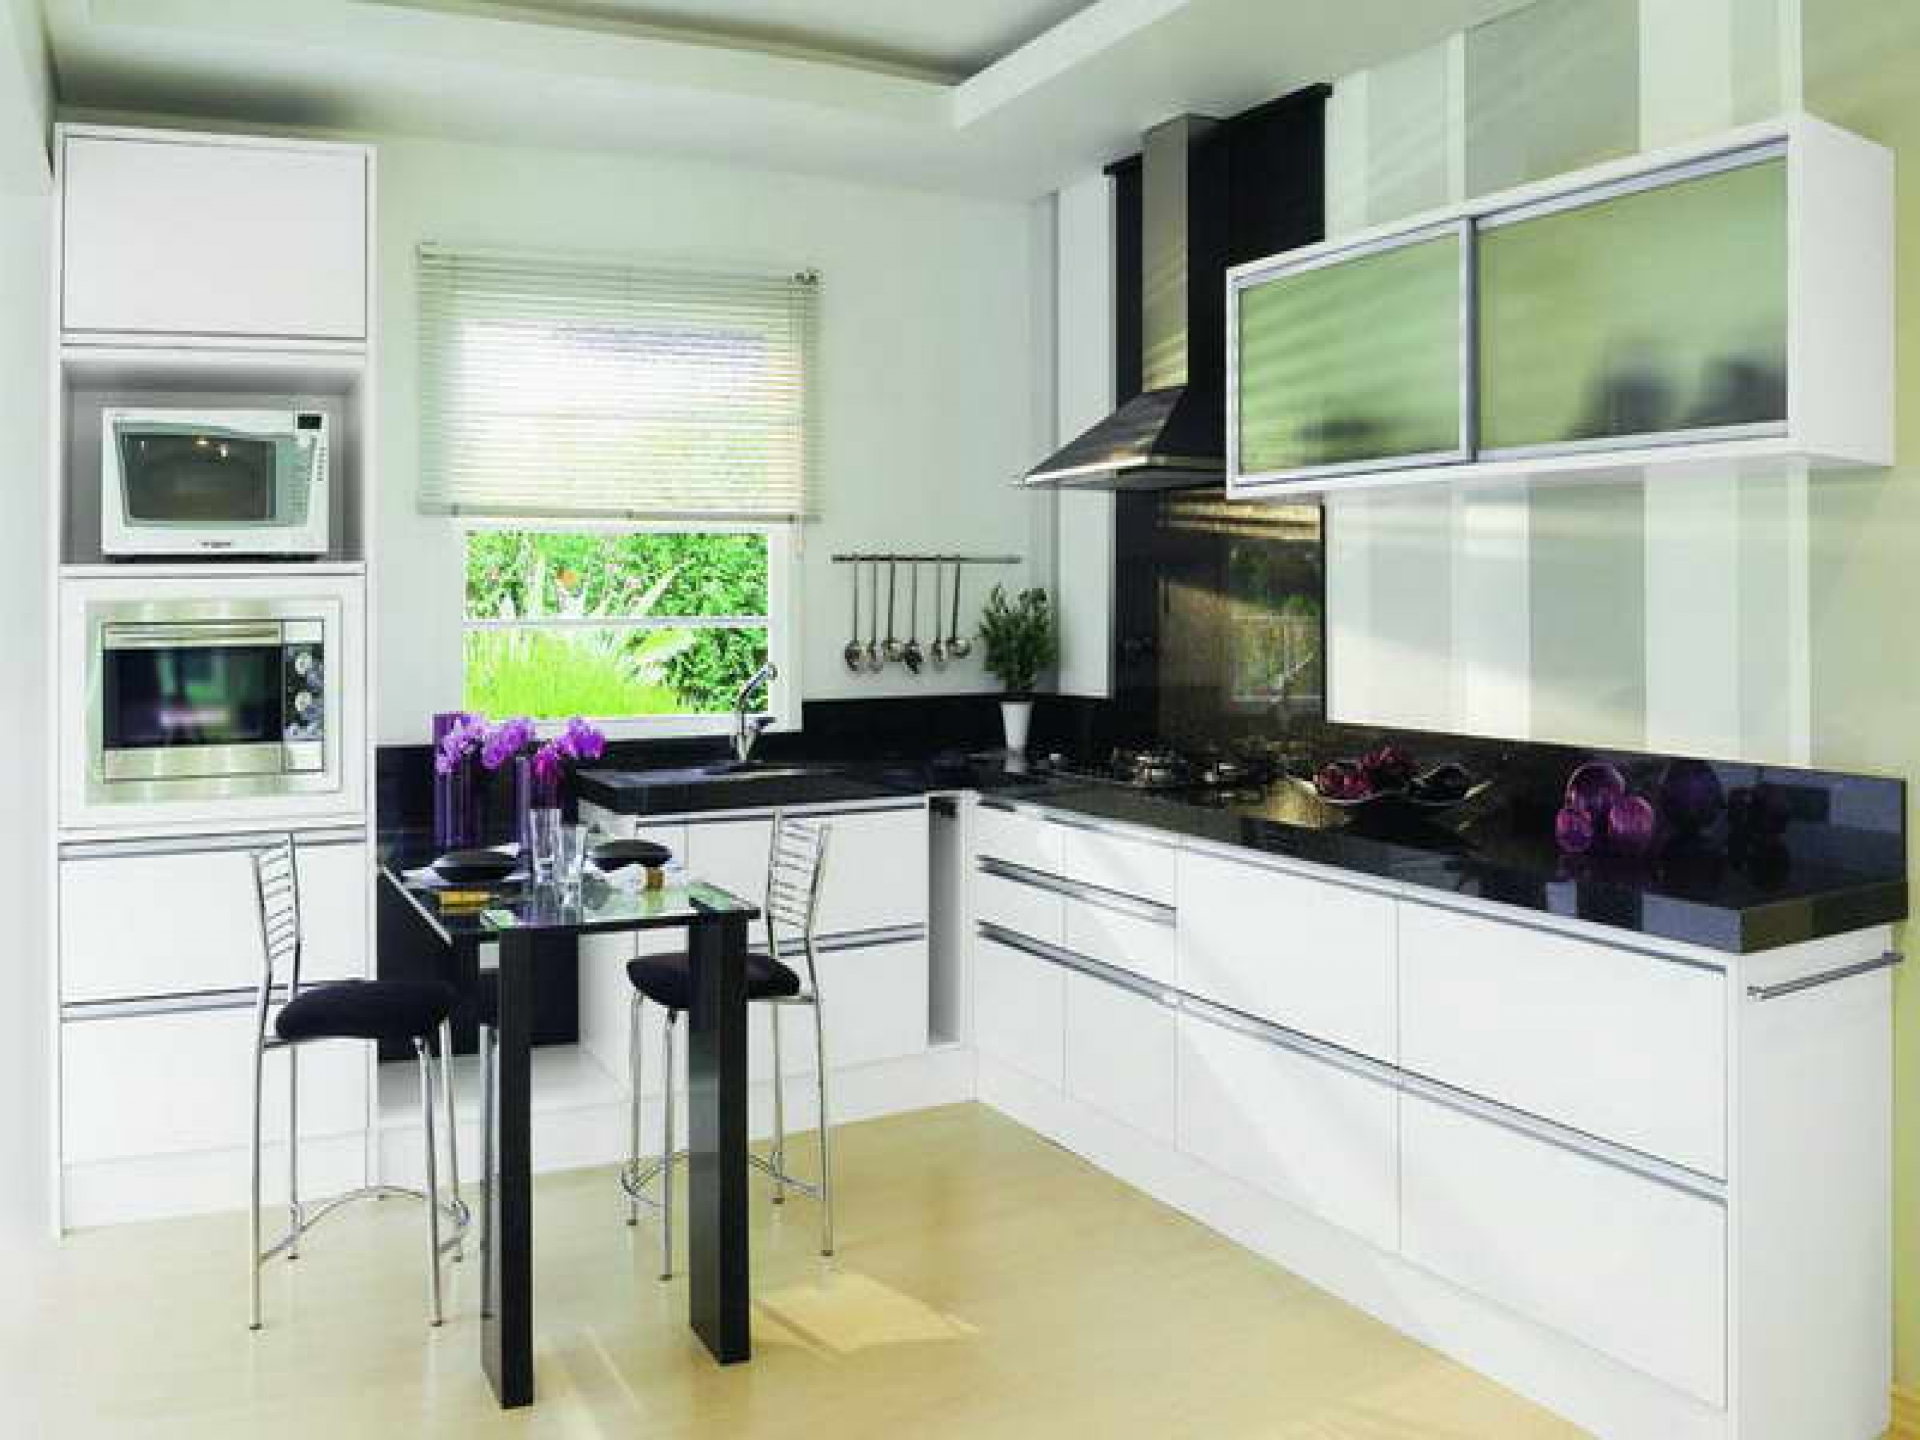 kitchen idea for small space cool kitchen designs for small spaces on home decor kitchen design YMYRWBH